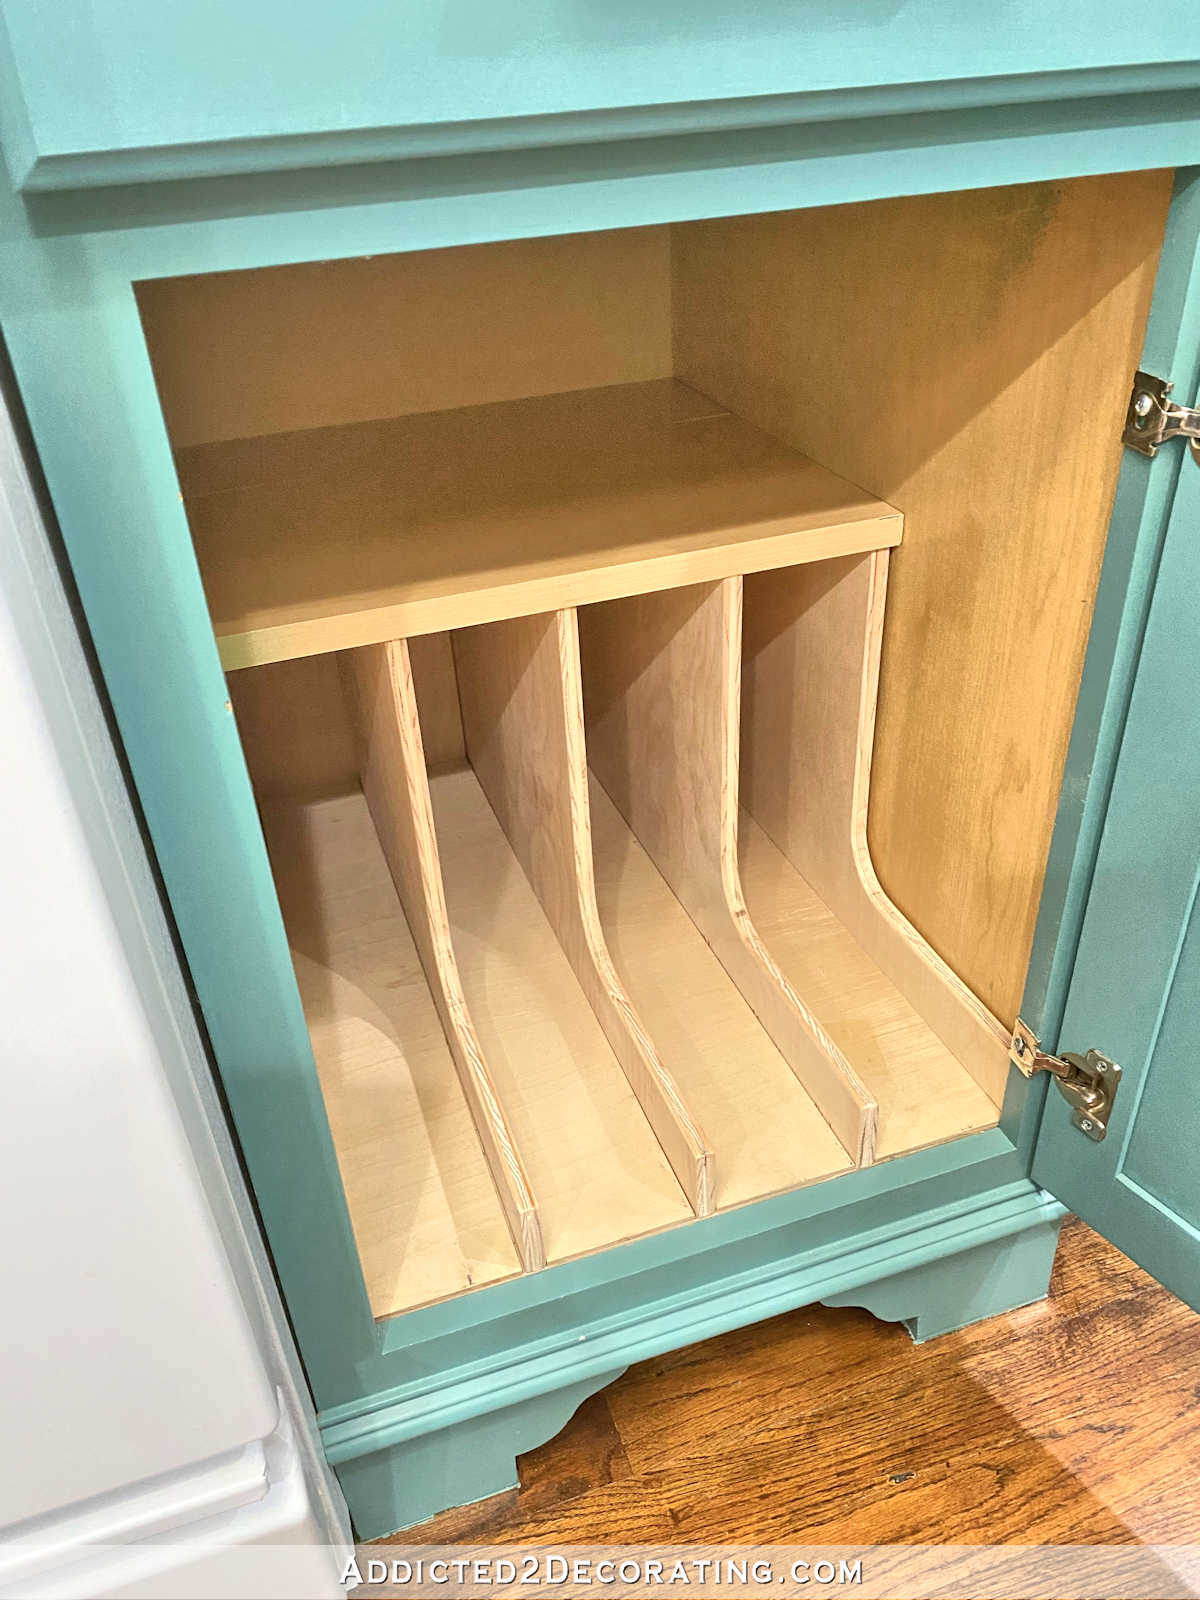 DIY pan organizer fully assembled inside kitchen cabinet